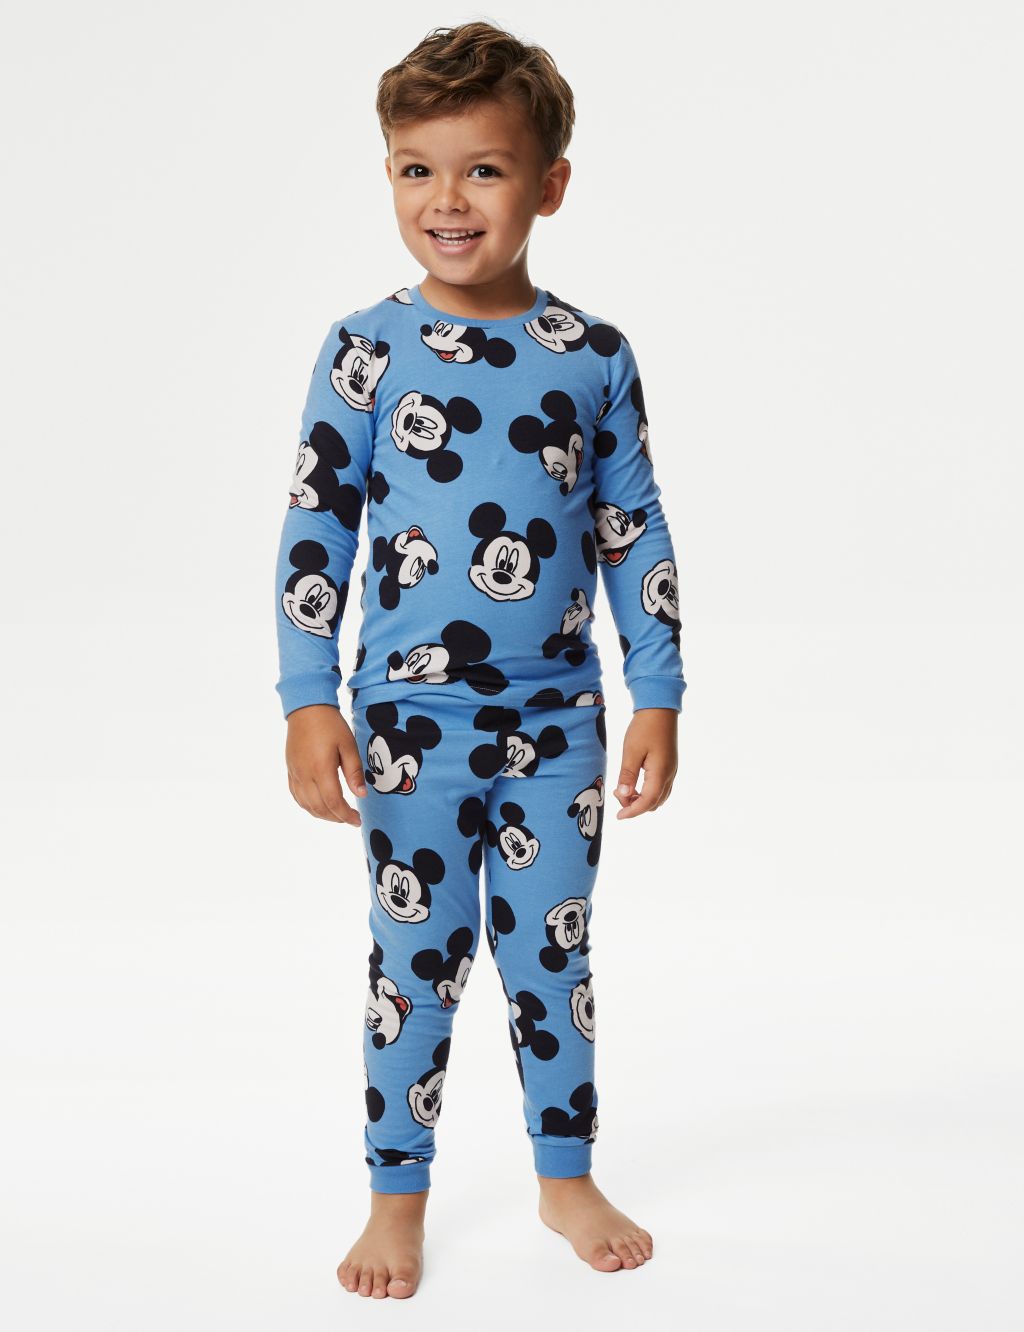 Disney Mickey Mouse Boys Underwear - 8-Pack Toddler/Little Kid/Big